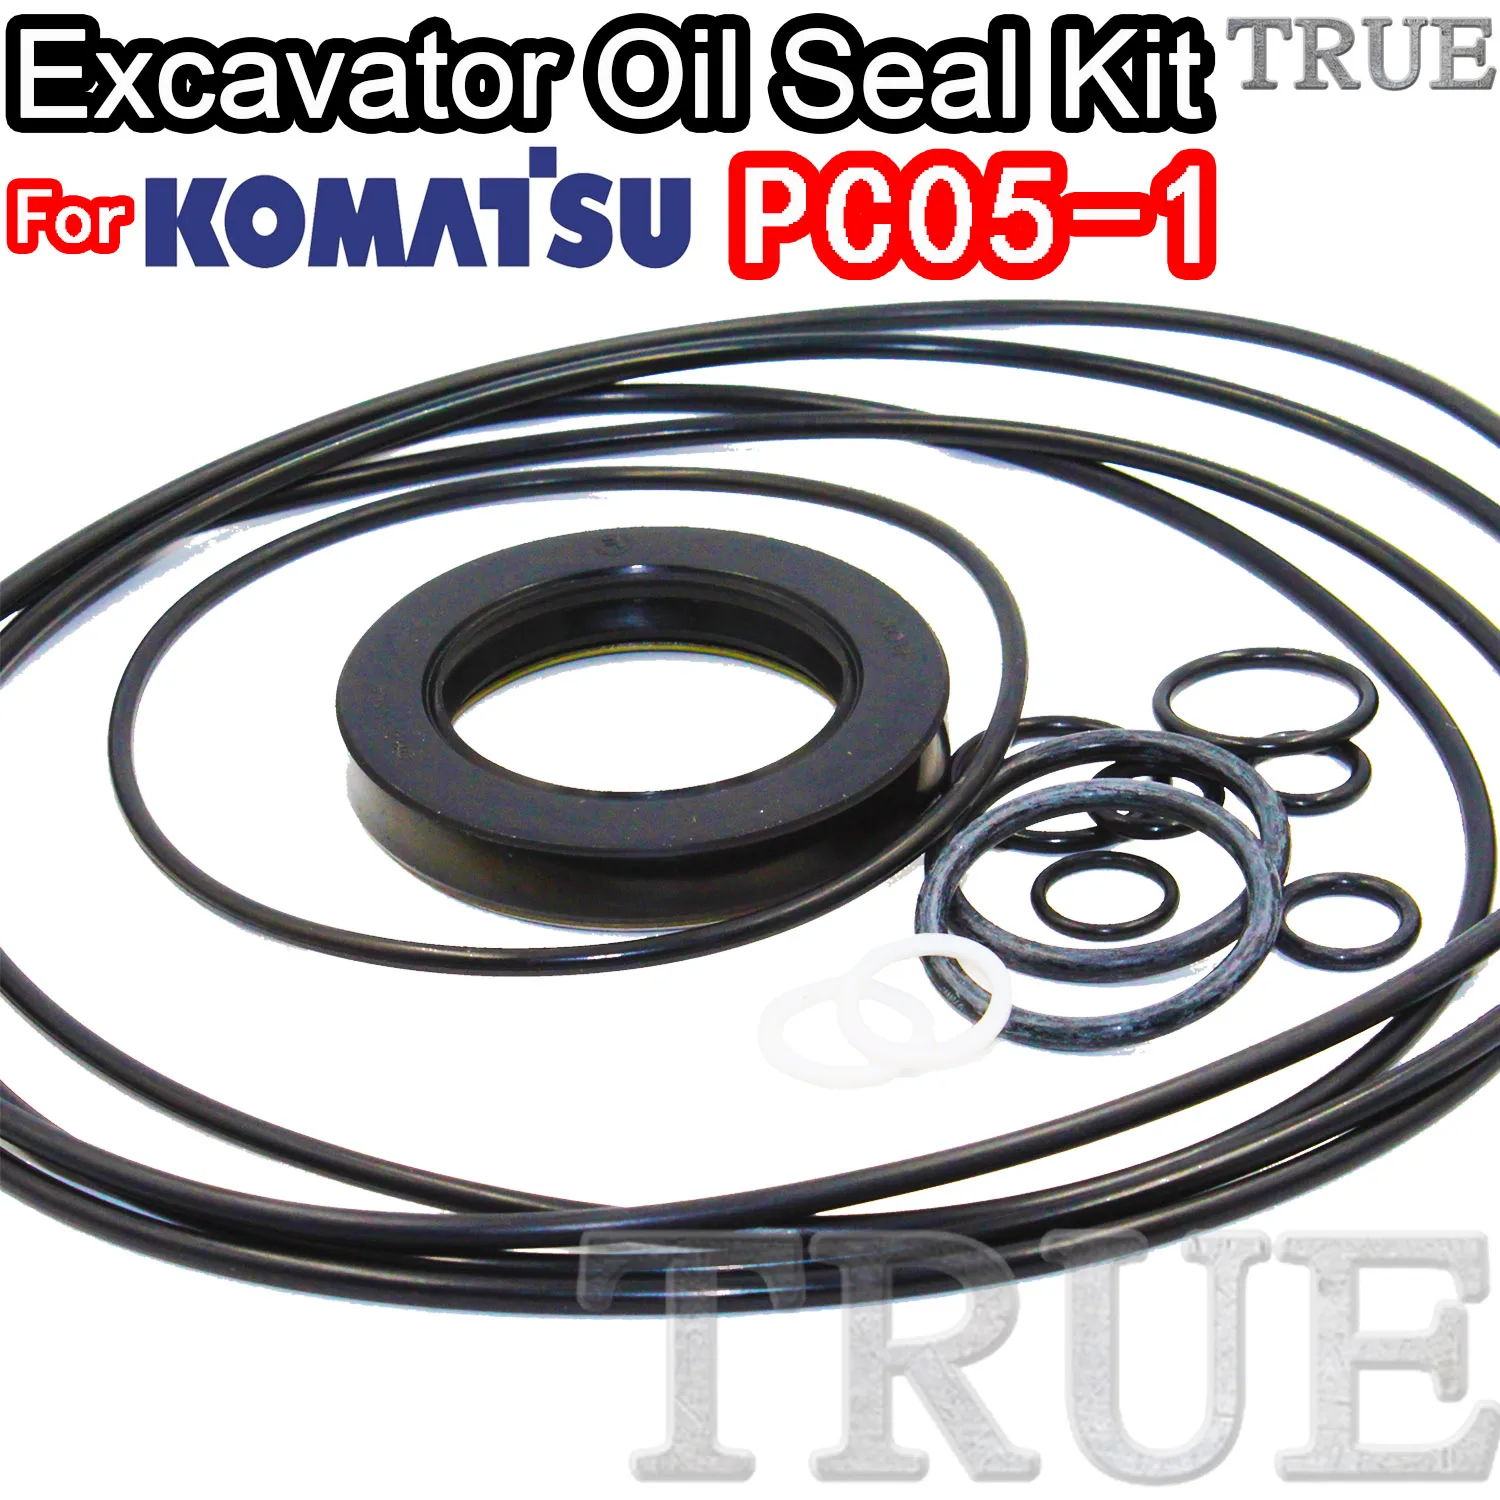 

For KOMATSU PC05-1 Excavator Oil Seals Kit Repair Nitrile NBR Nok Washer Skf Service Orginal Quality Track Spovel Hammer Tool